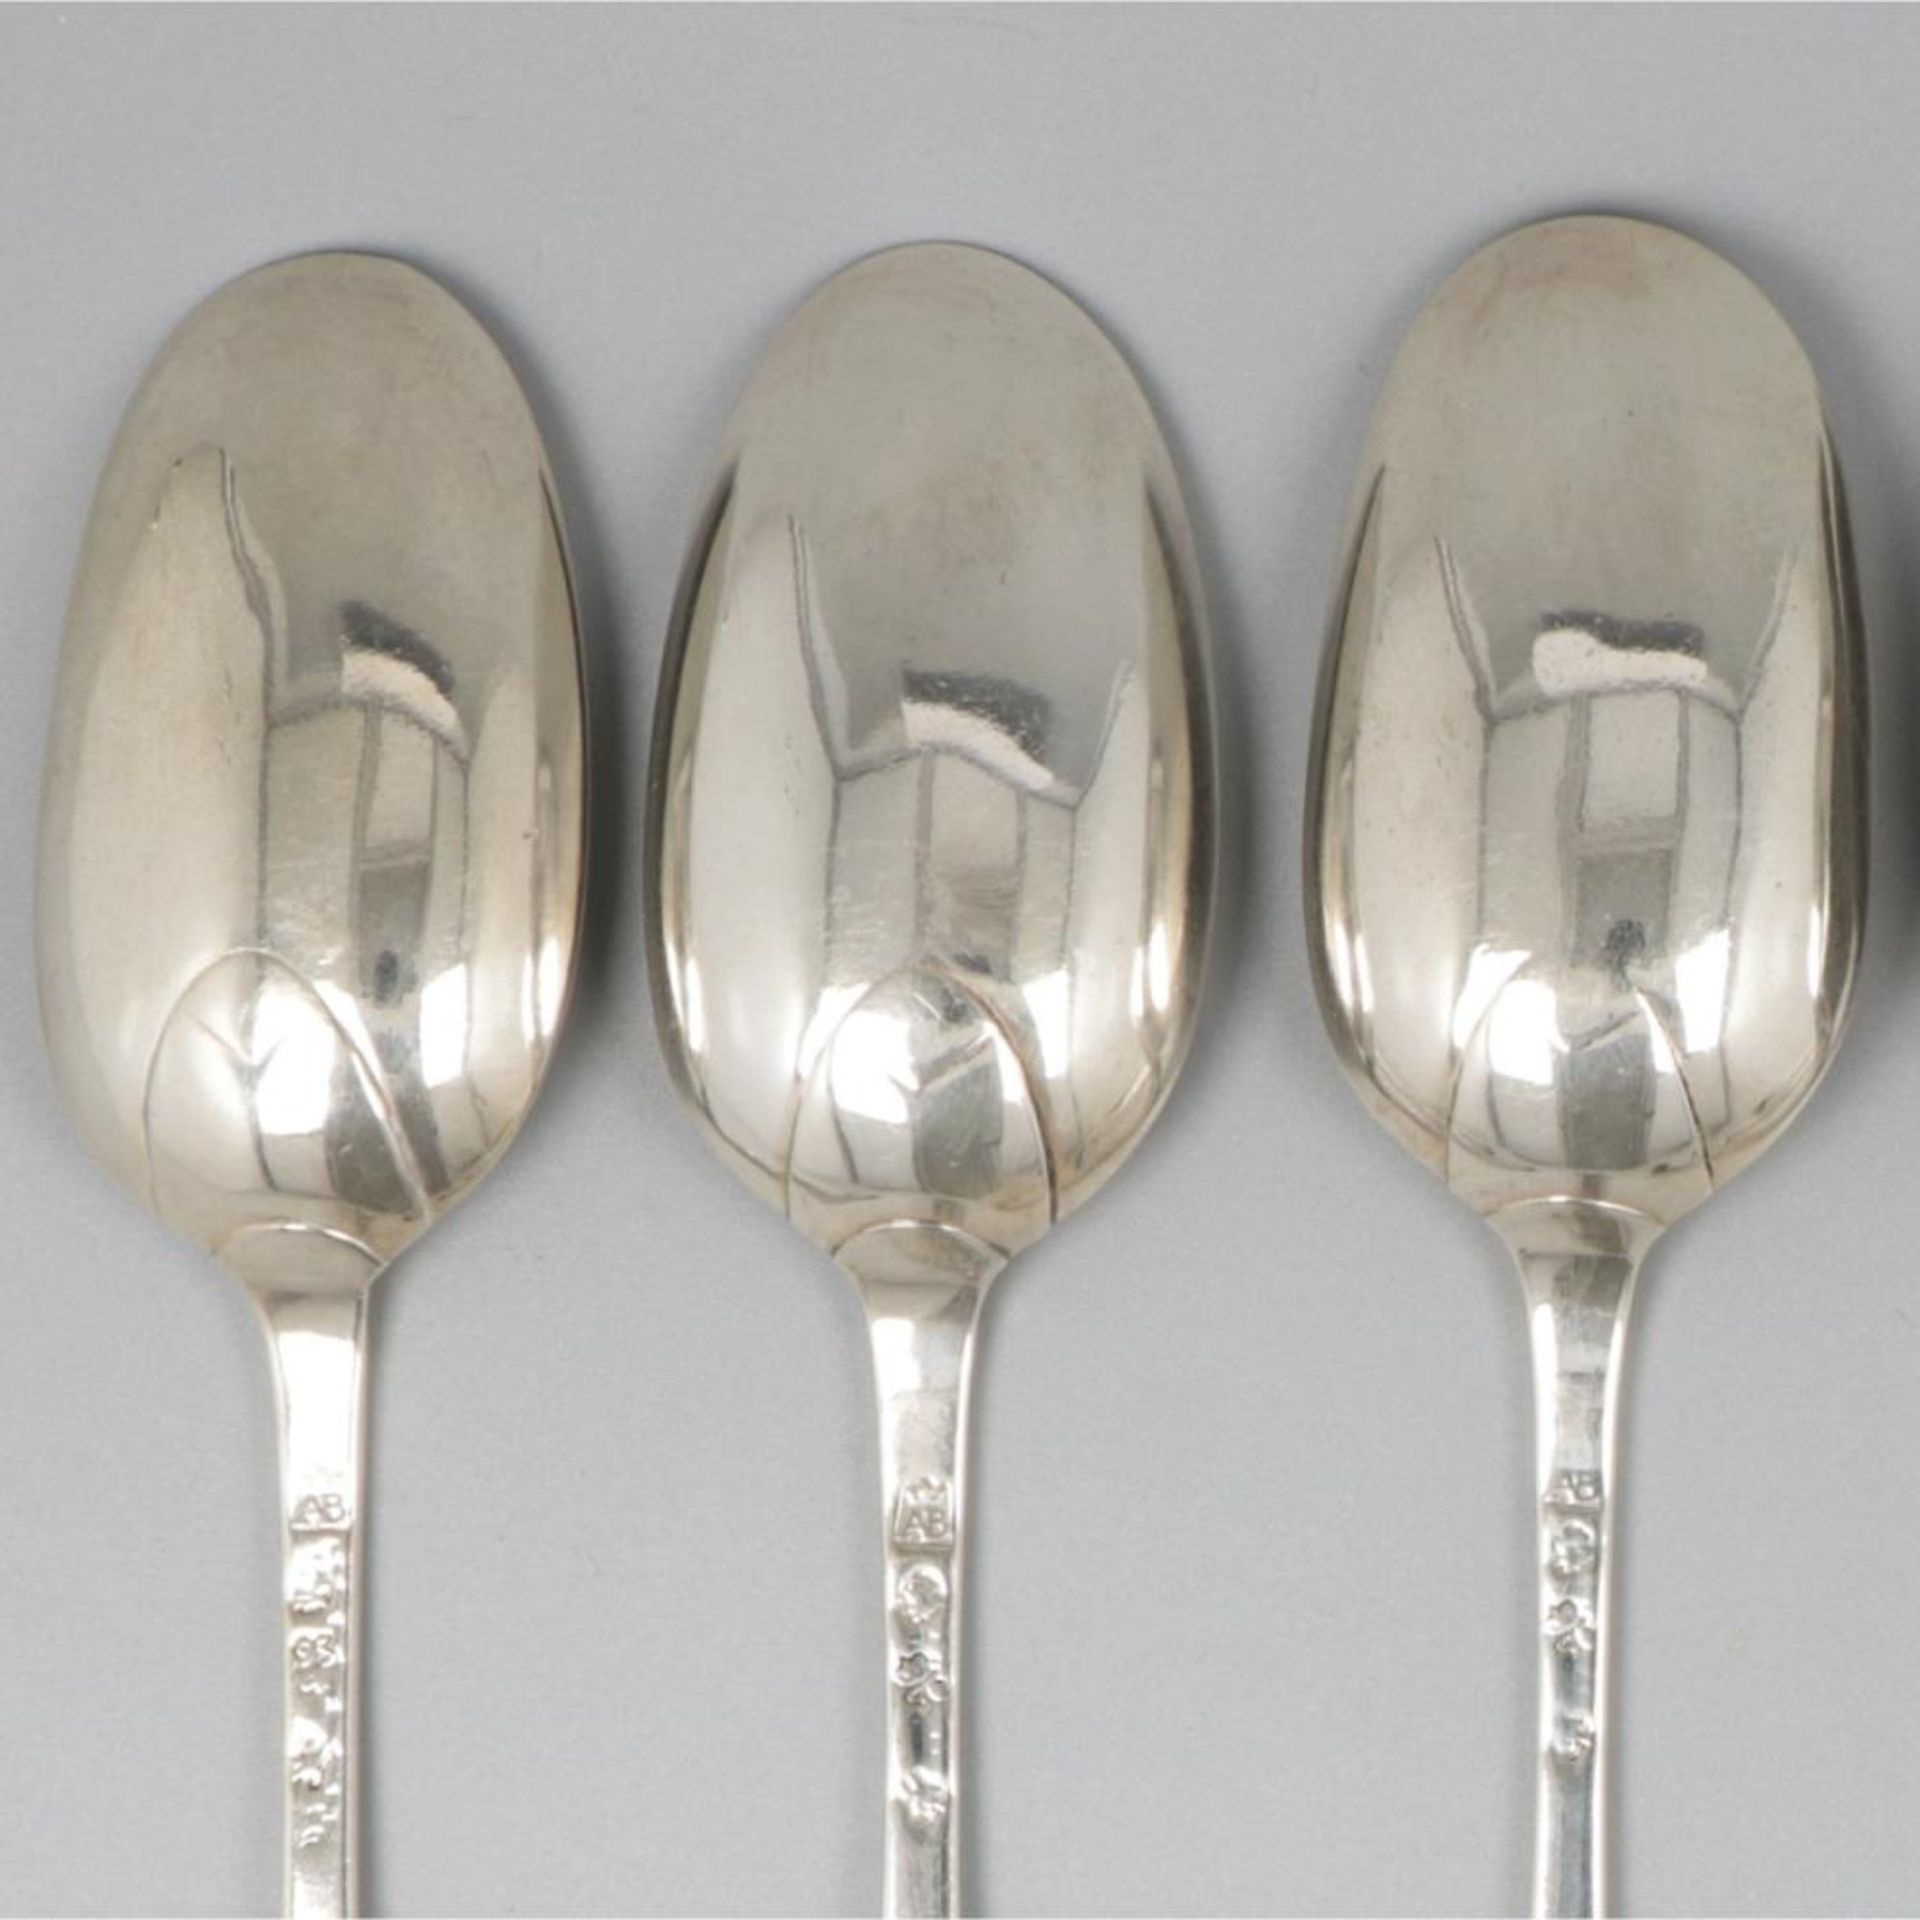 Set of 6 spoons (Bruges, Belgium, Adrianus Buschop 1756) silver. - Image 4 of 8